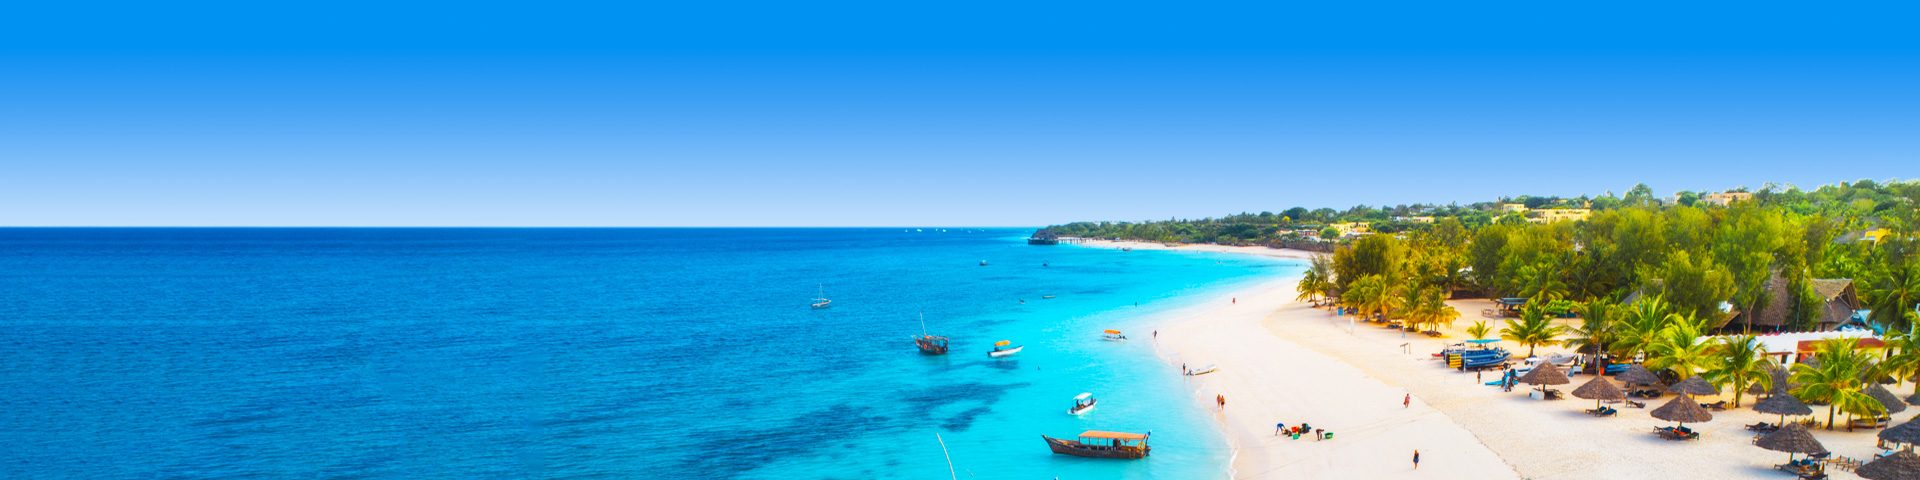 Azuurblauwe zee in Zanzibar